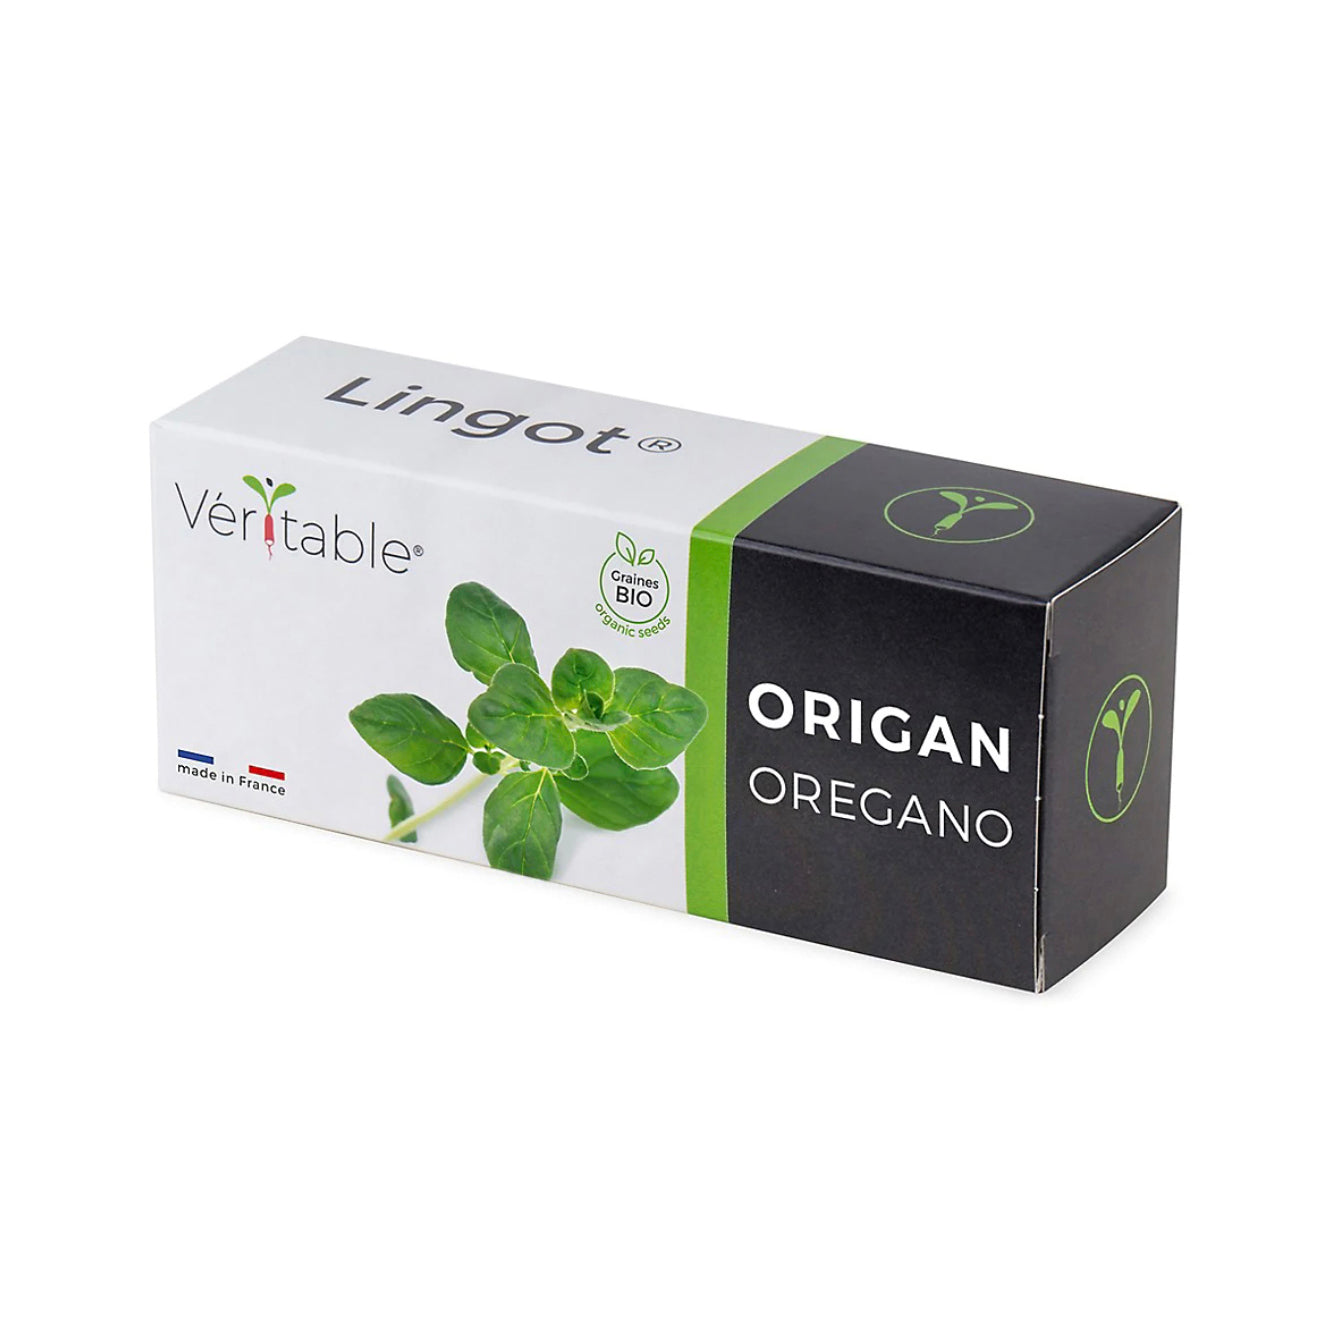 VERITABLE Lingot, Organic Oregano